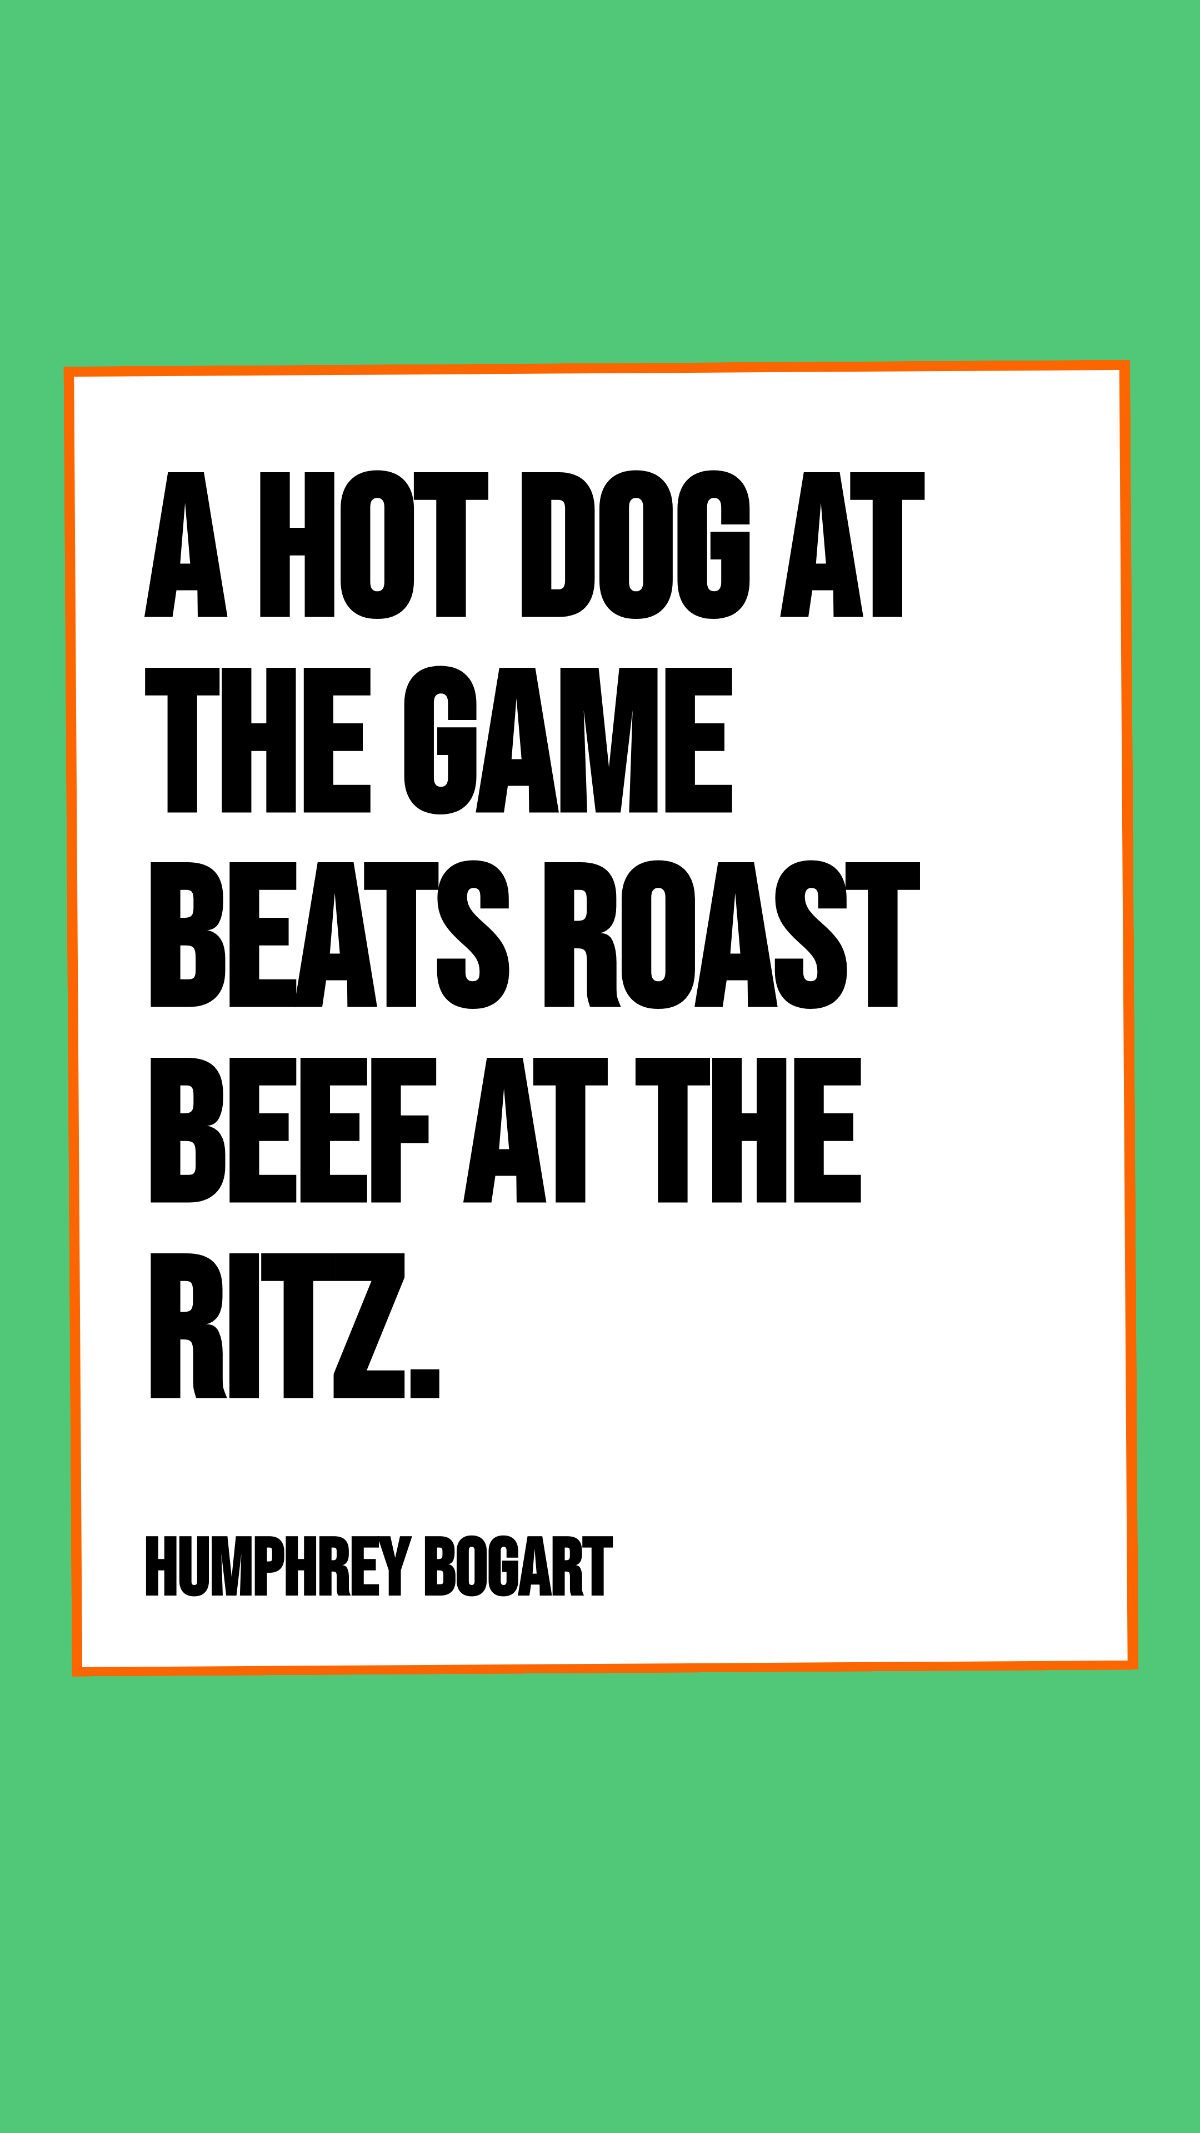 Humphrey Bogart - A hot dog at the game beats roast beef at the Ritz. Template